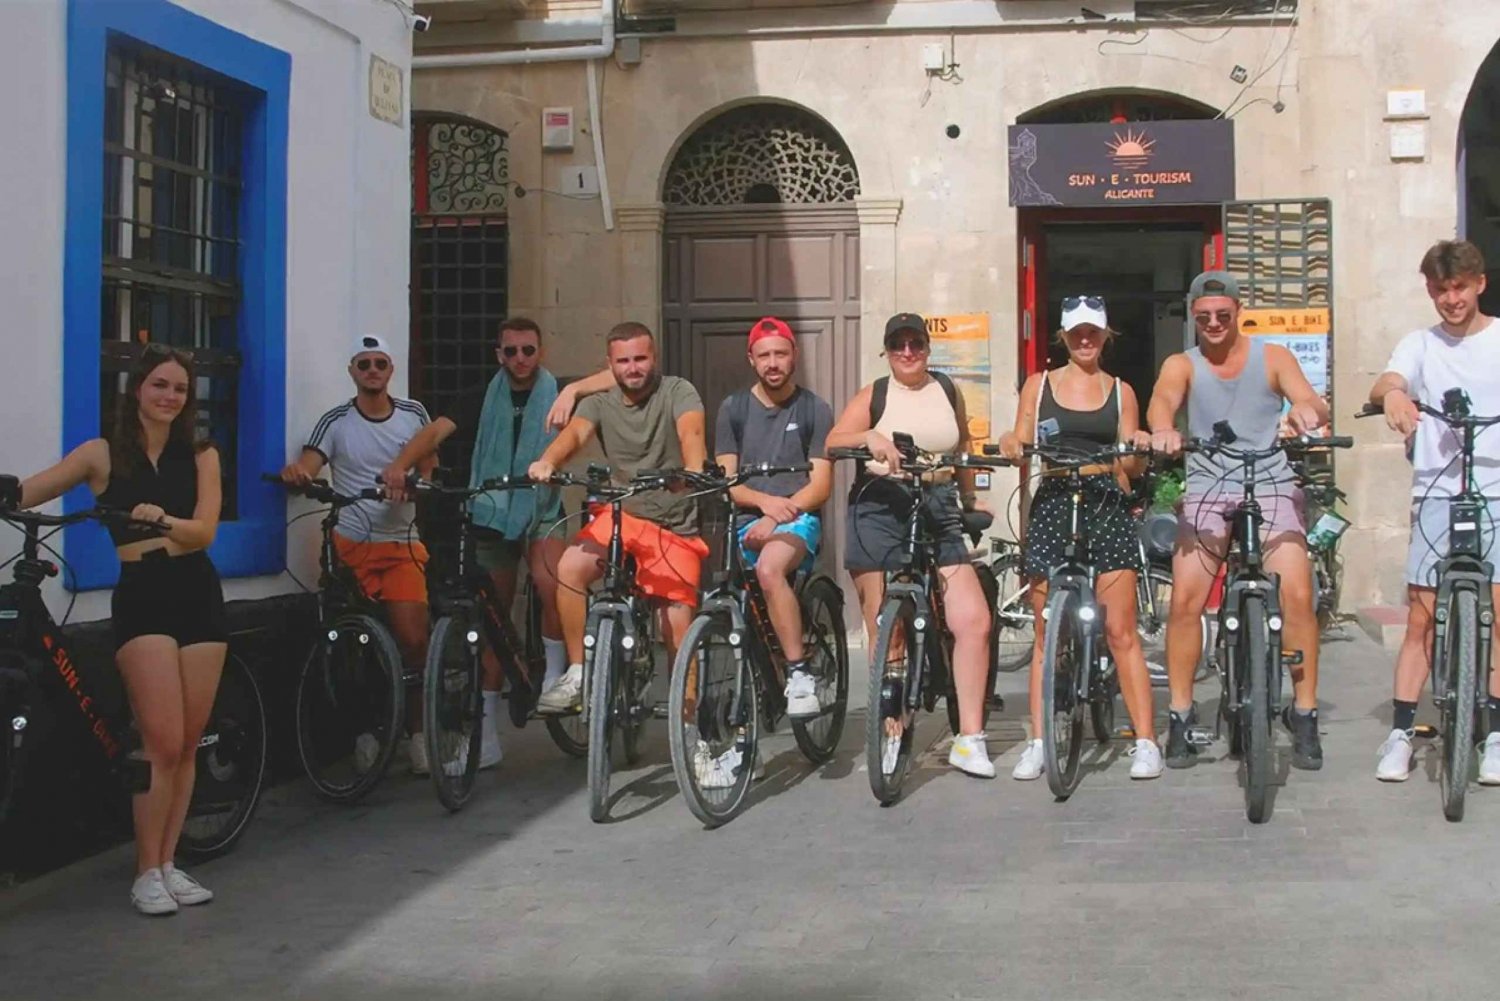 Alicante: Coast E-bike and hiking tour